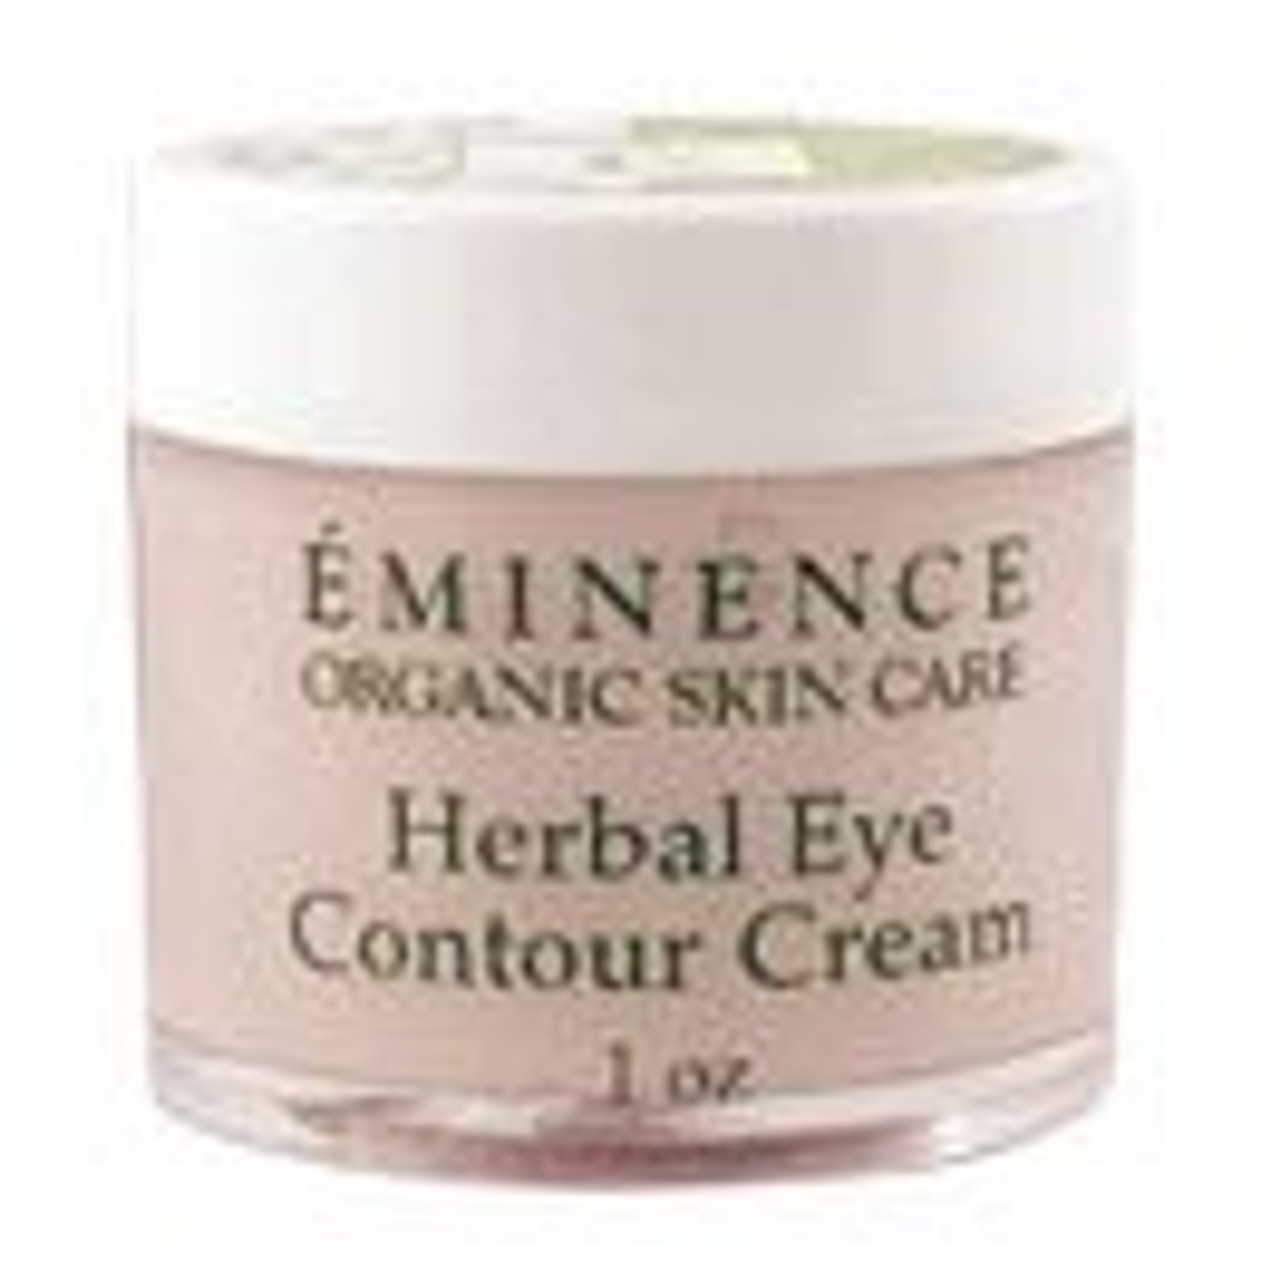 Eminence Herbal Eye Contour Cream, 1 oz